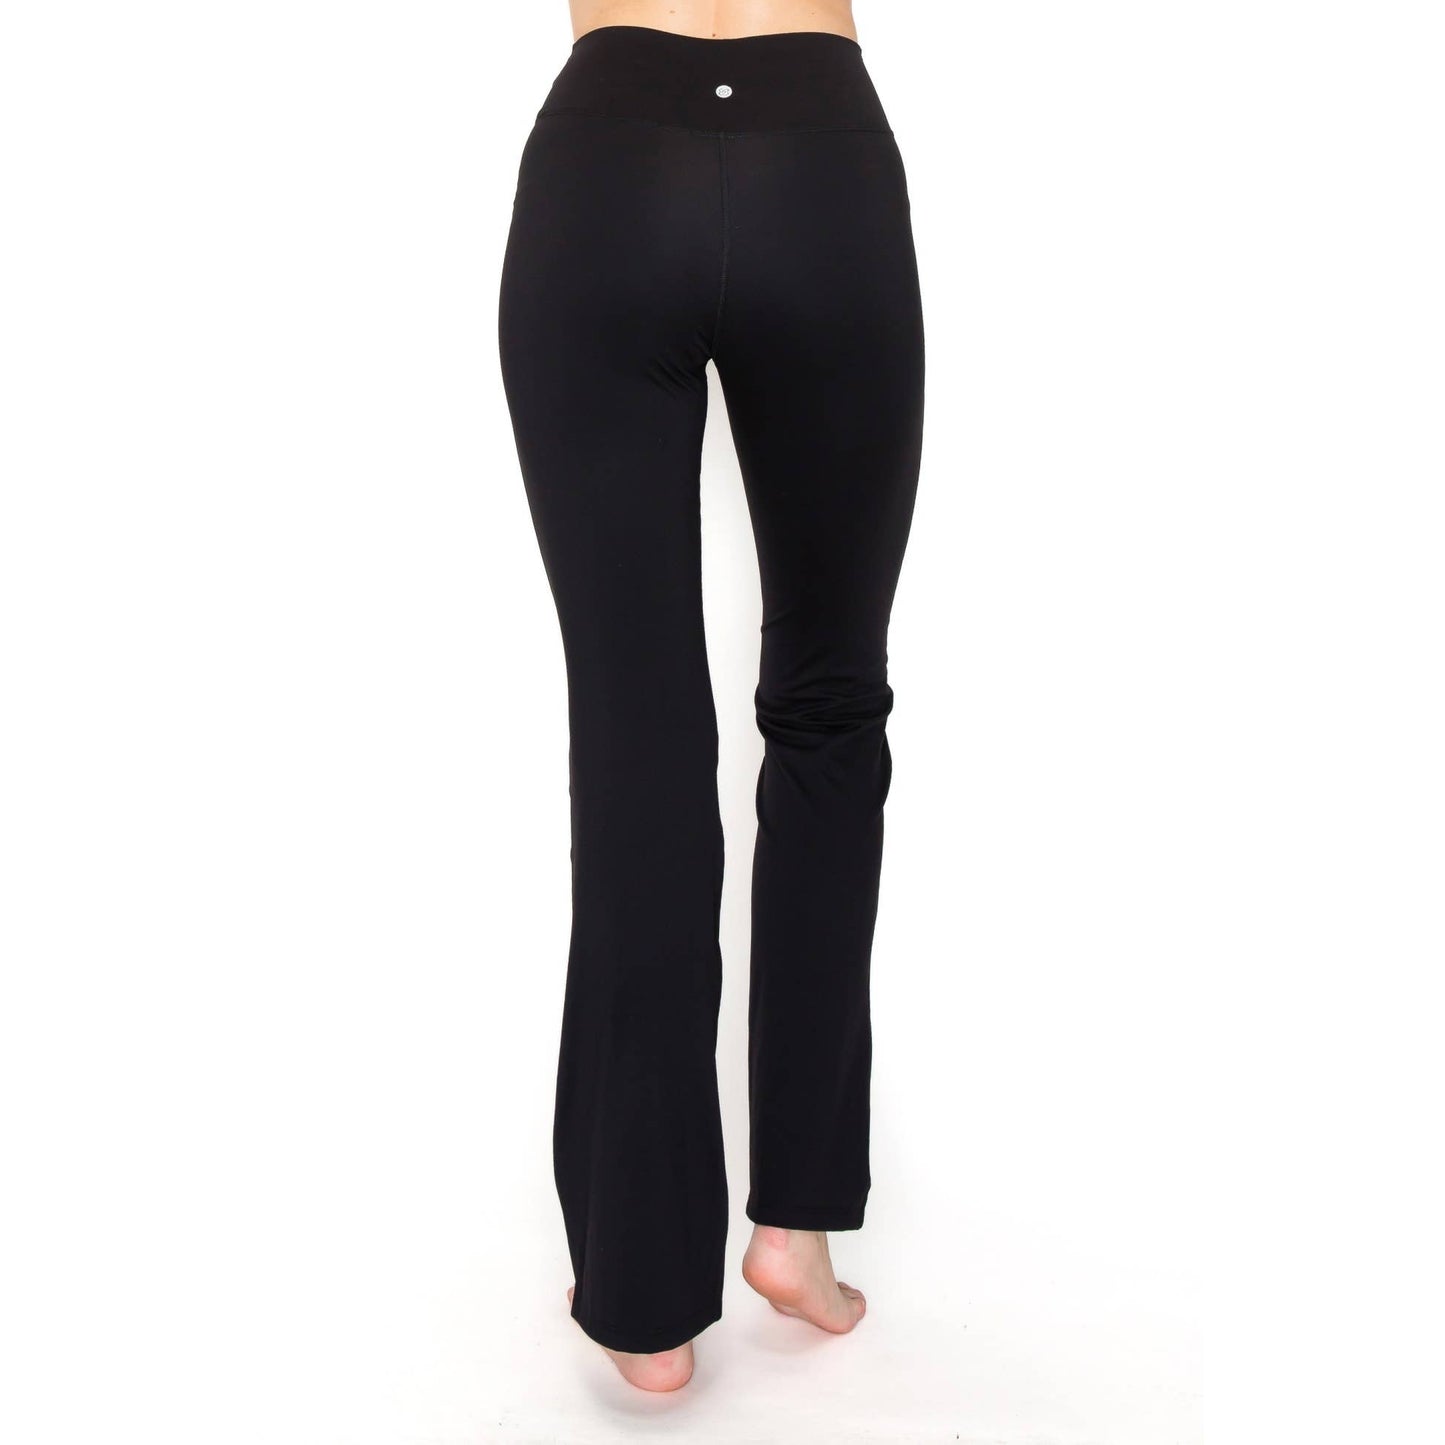 Flared Yoga Pants 31" Inseam: Black